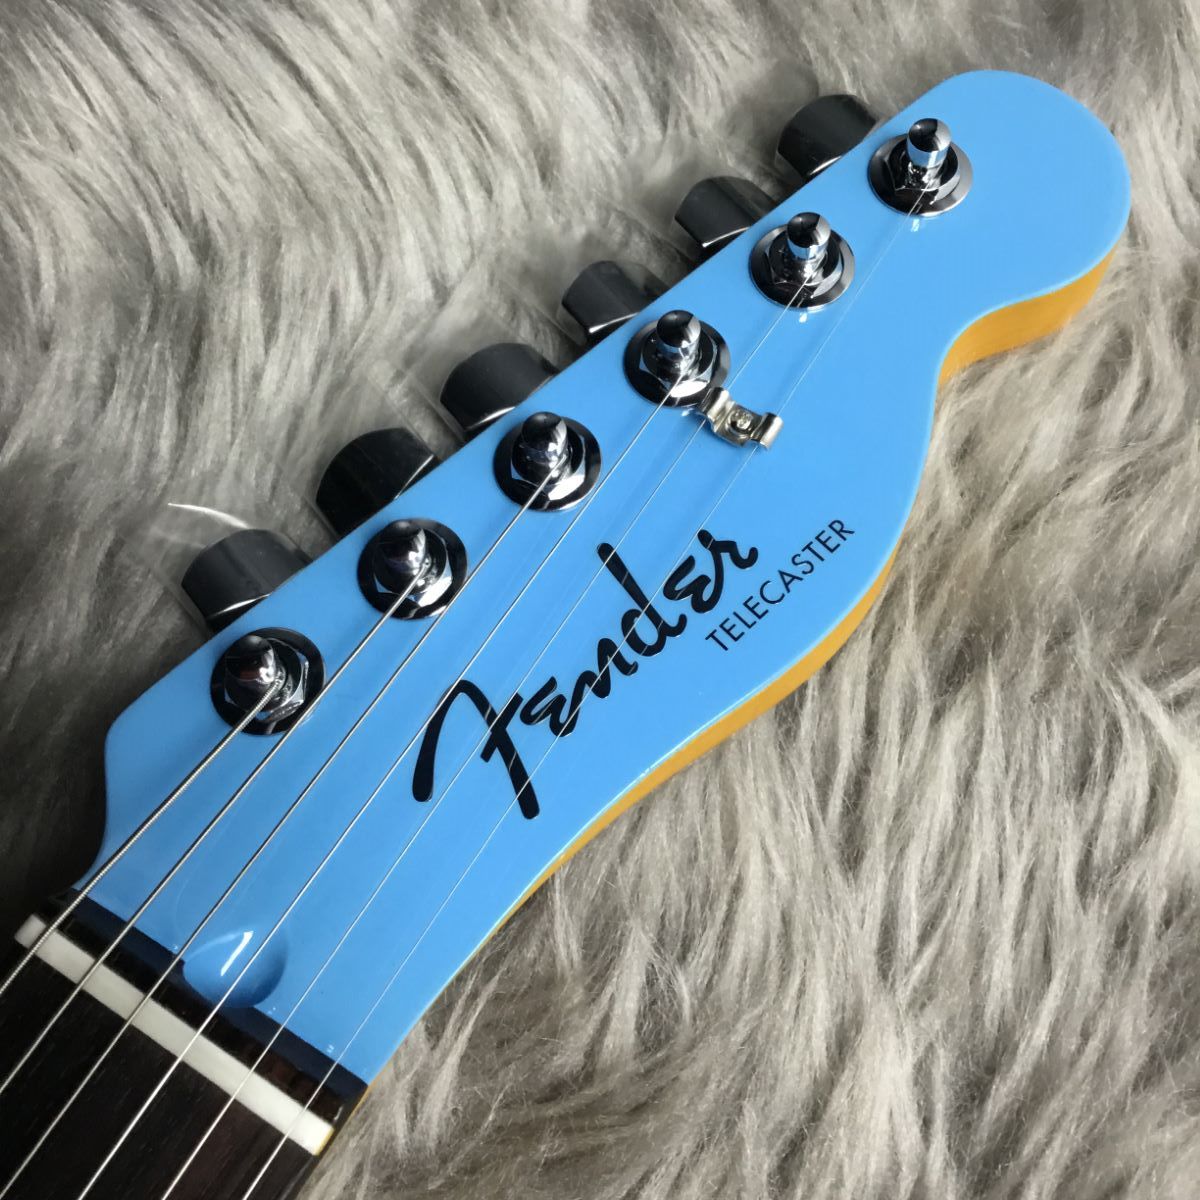 Fender Aerodyne Special Telecaster California Blue テレキャスター